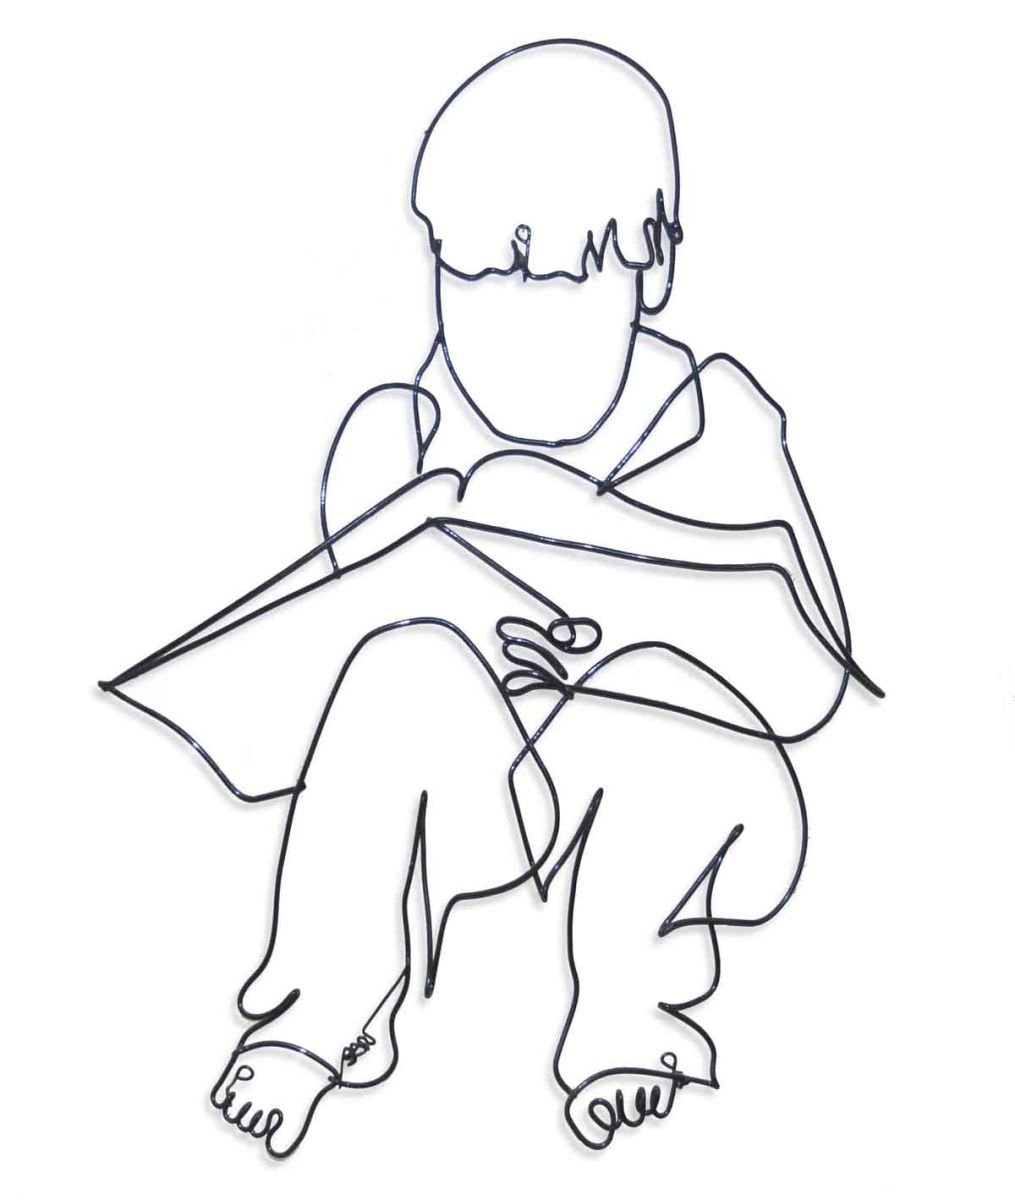 Boy Reading #397 by Bart Soutendijk